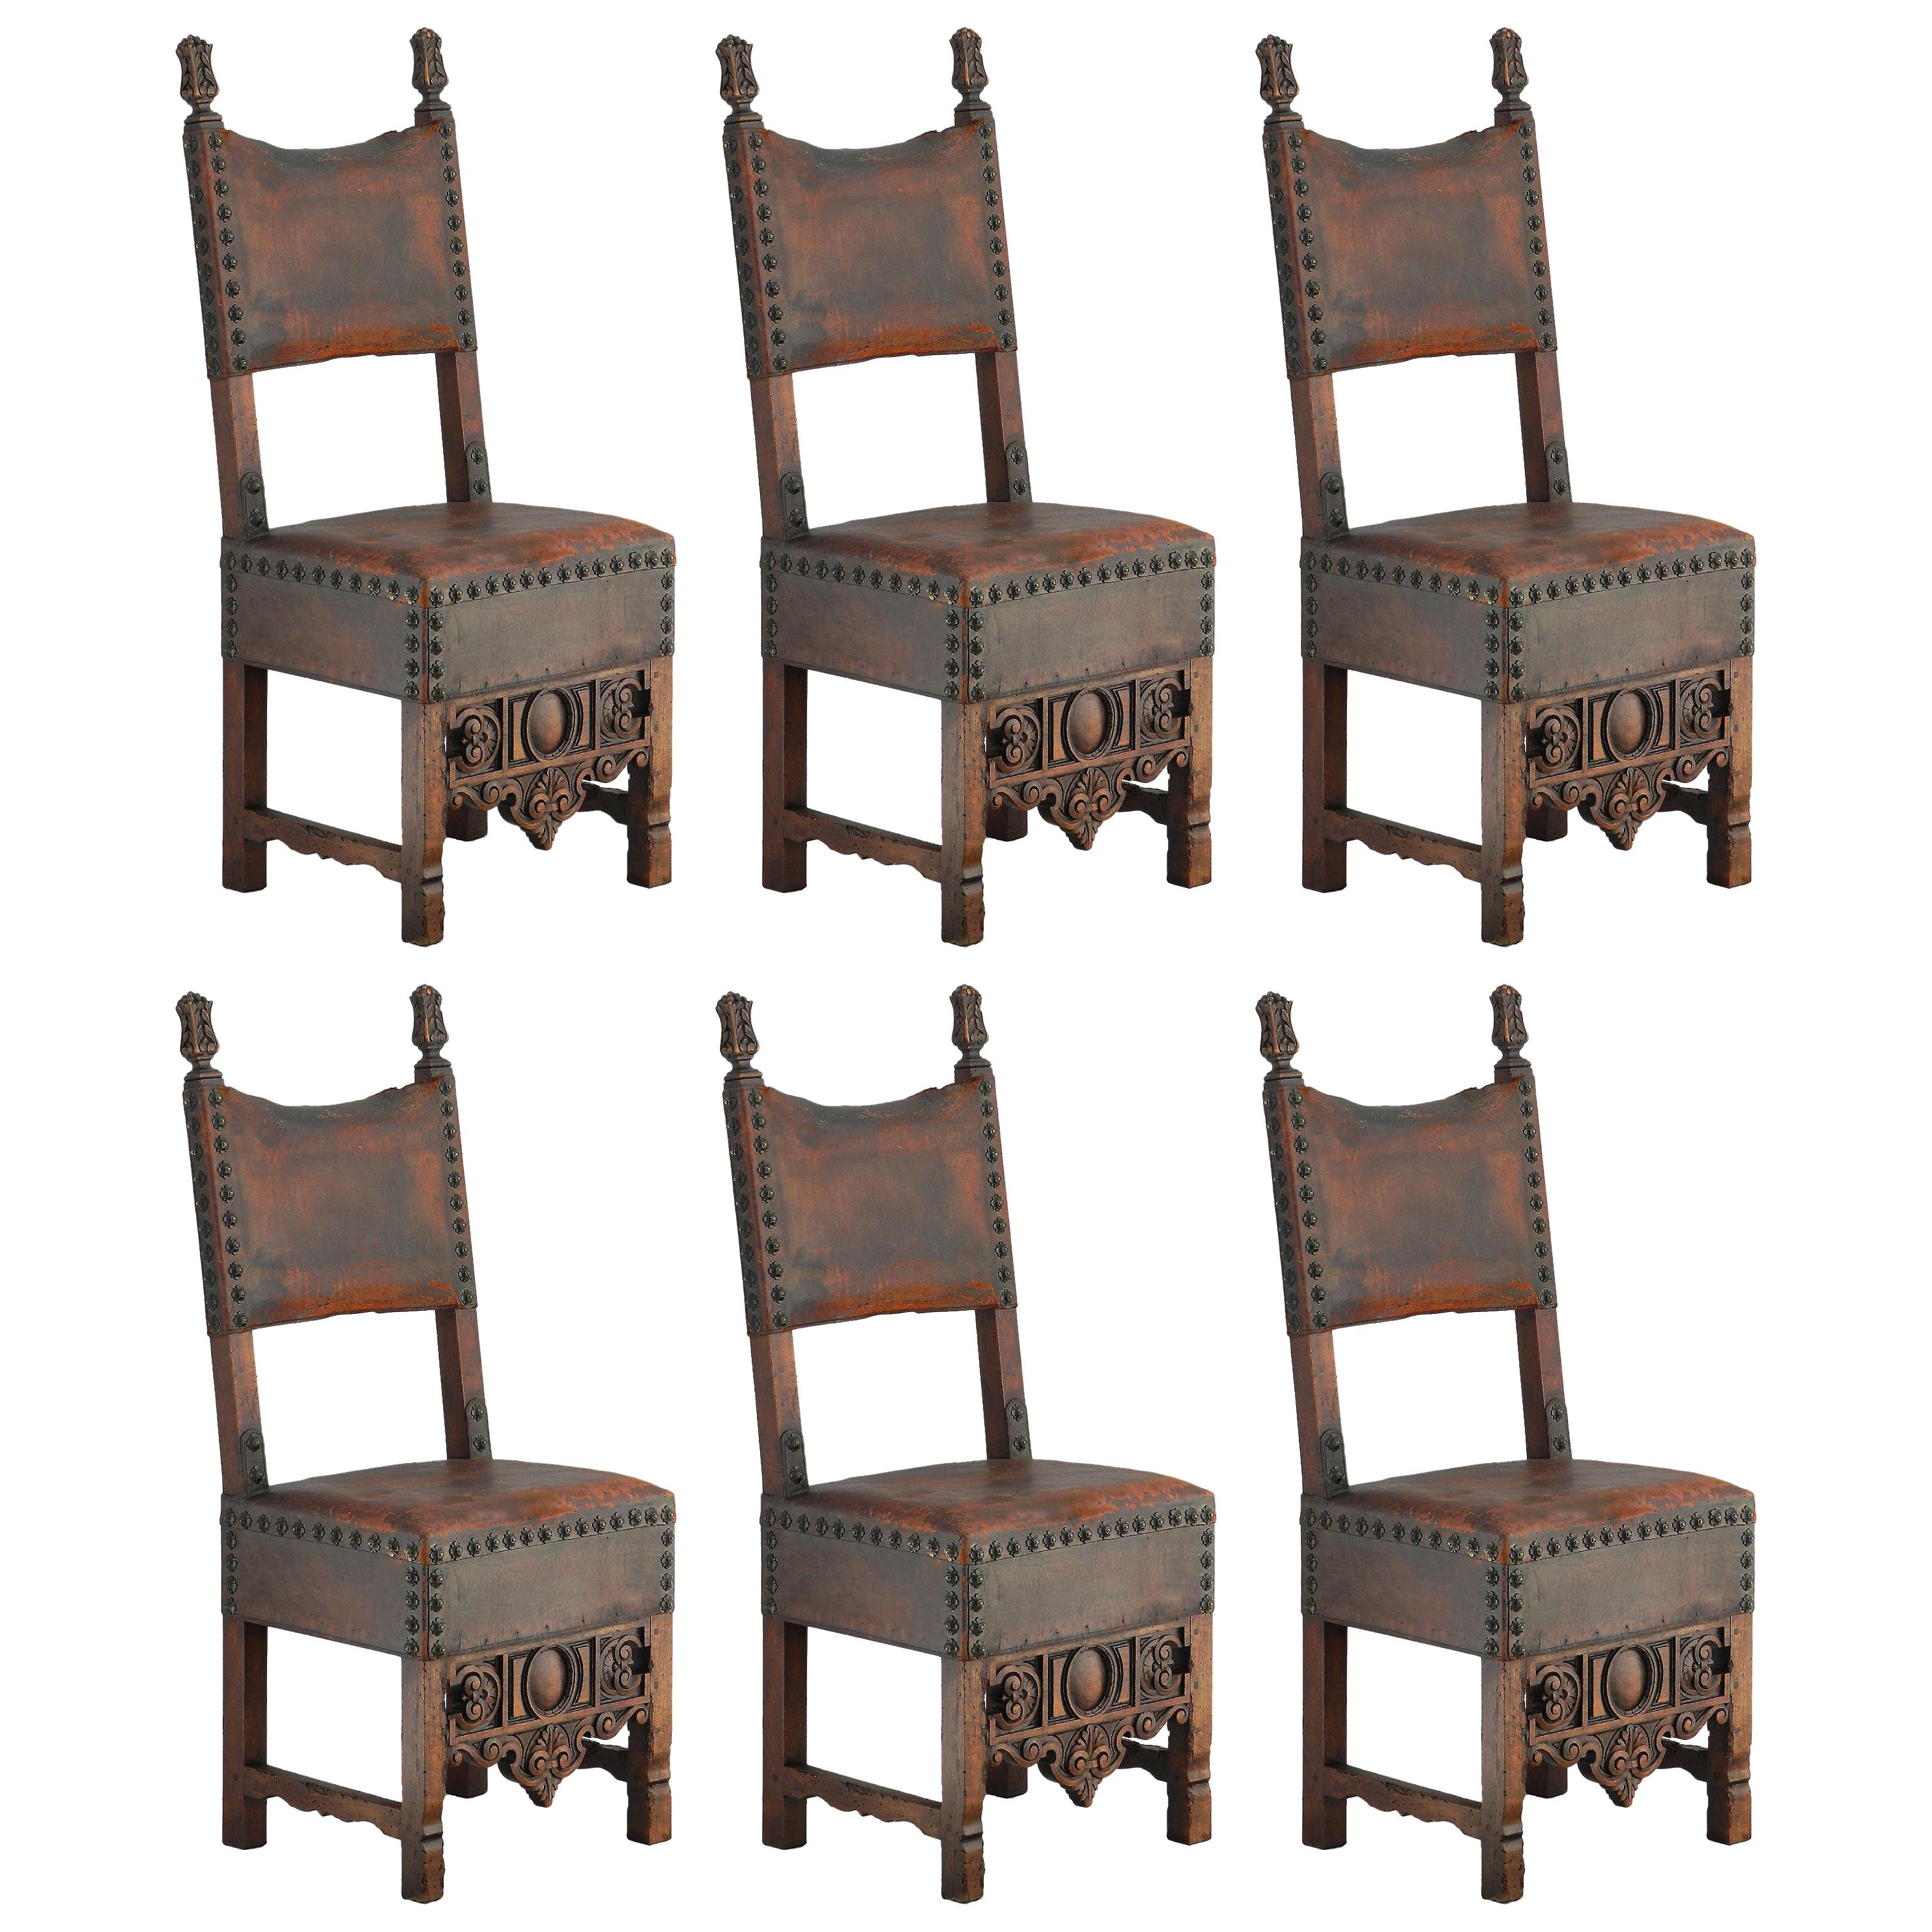 Six Spanish Dining Chairs Late 18th Century Renaissance